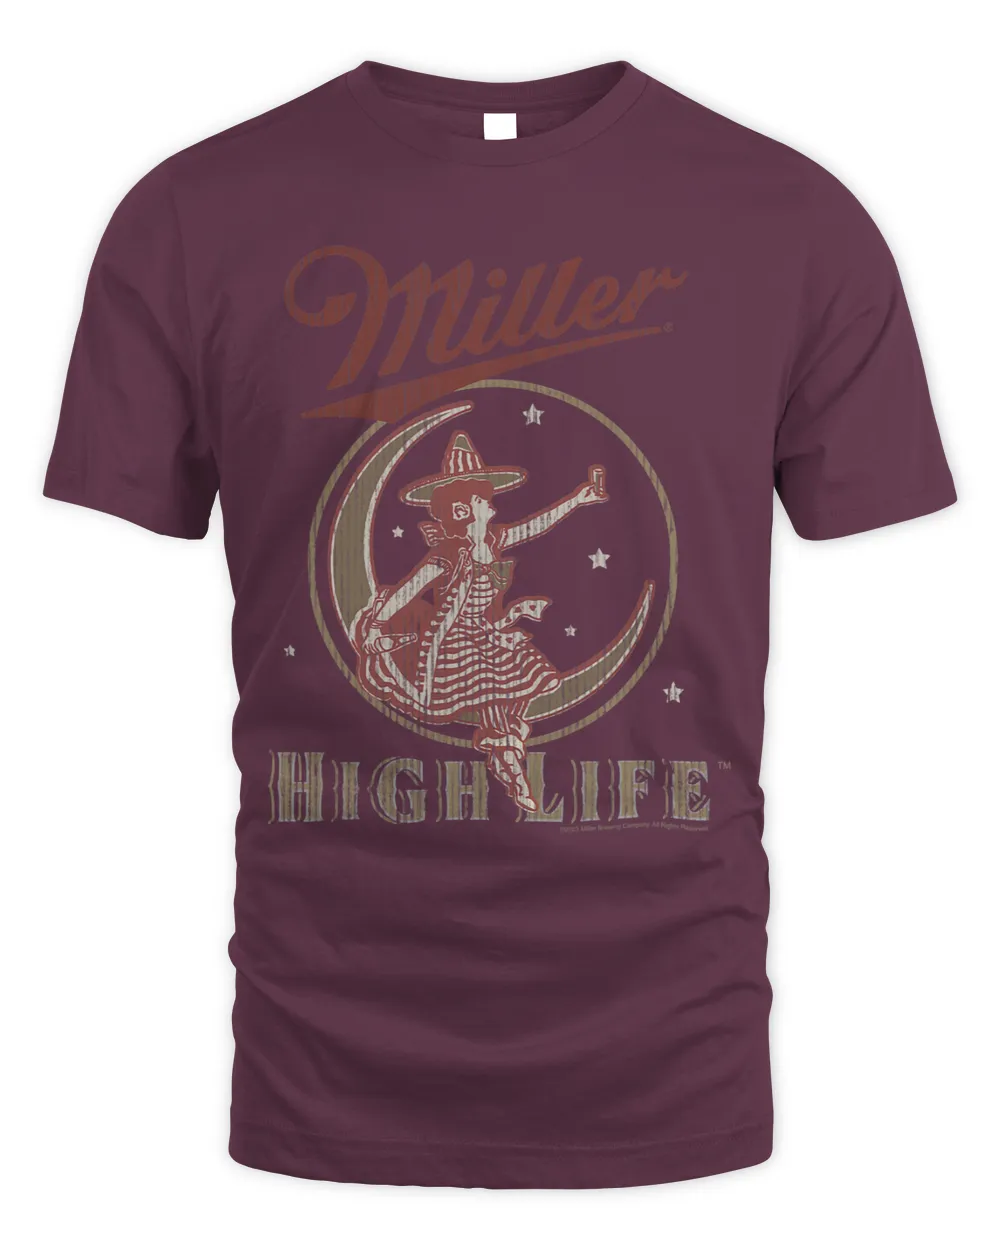 Coors Miller High Life Vintage Moon Logo